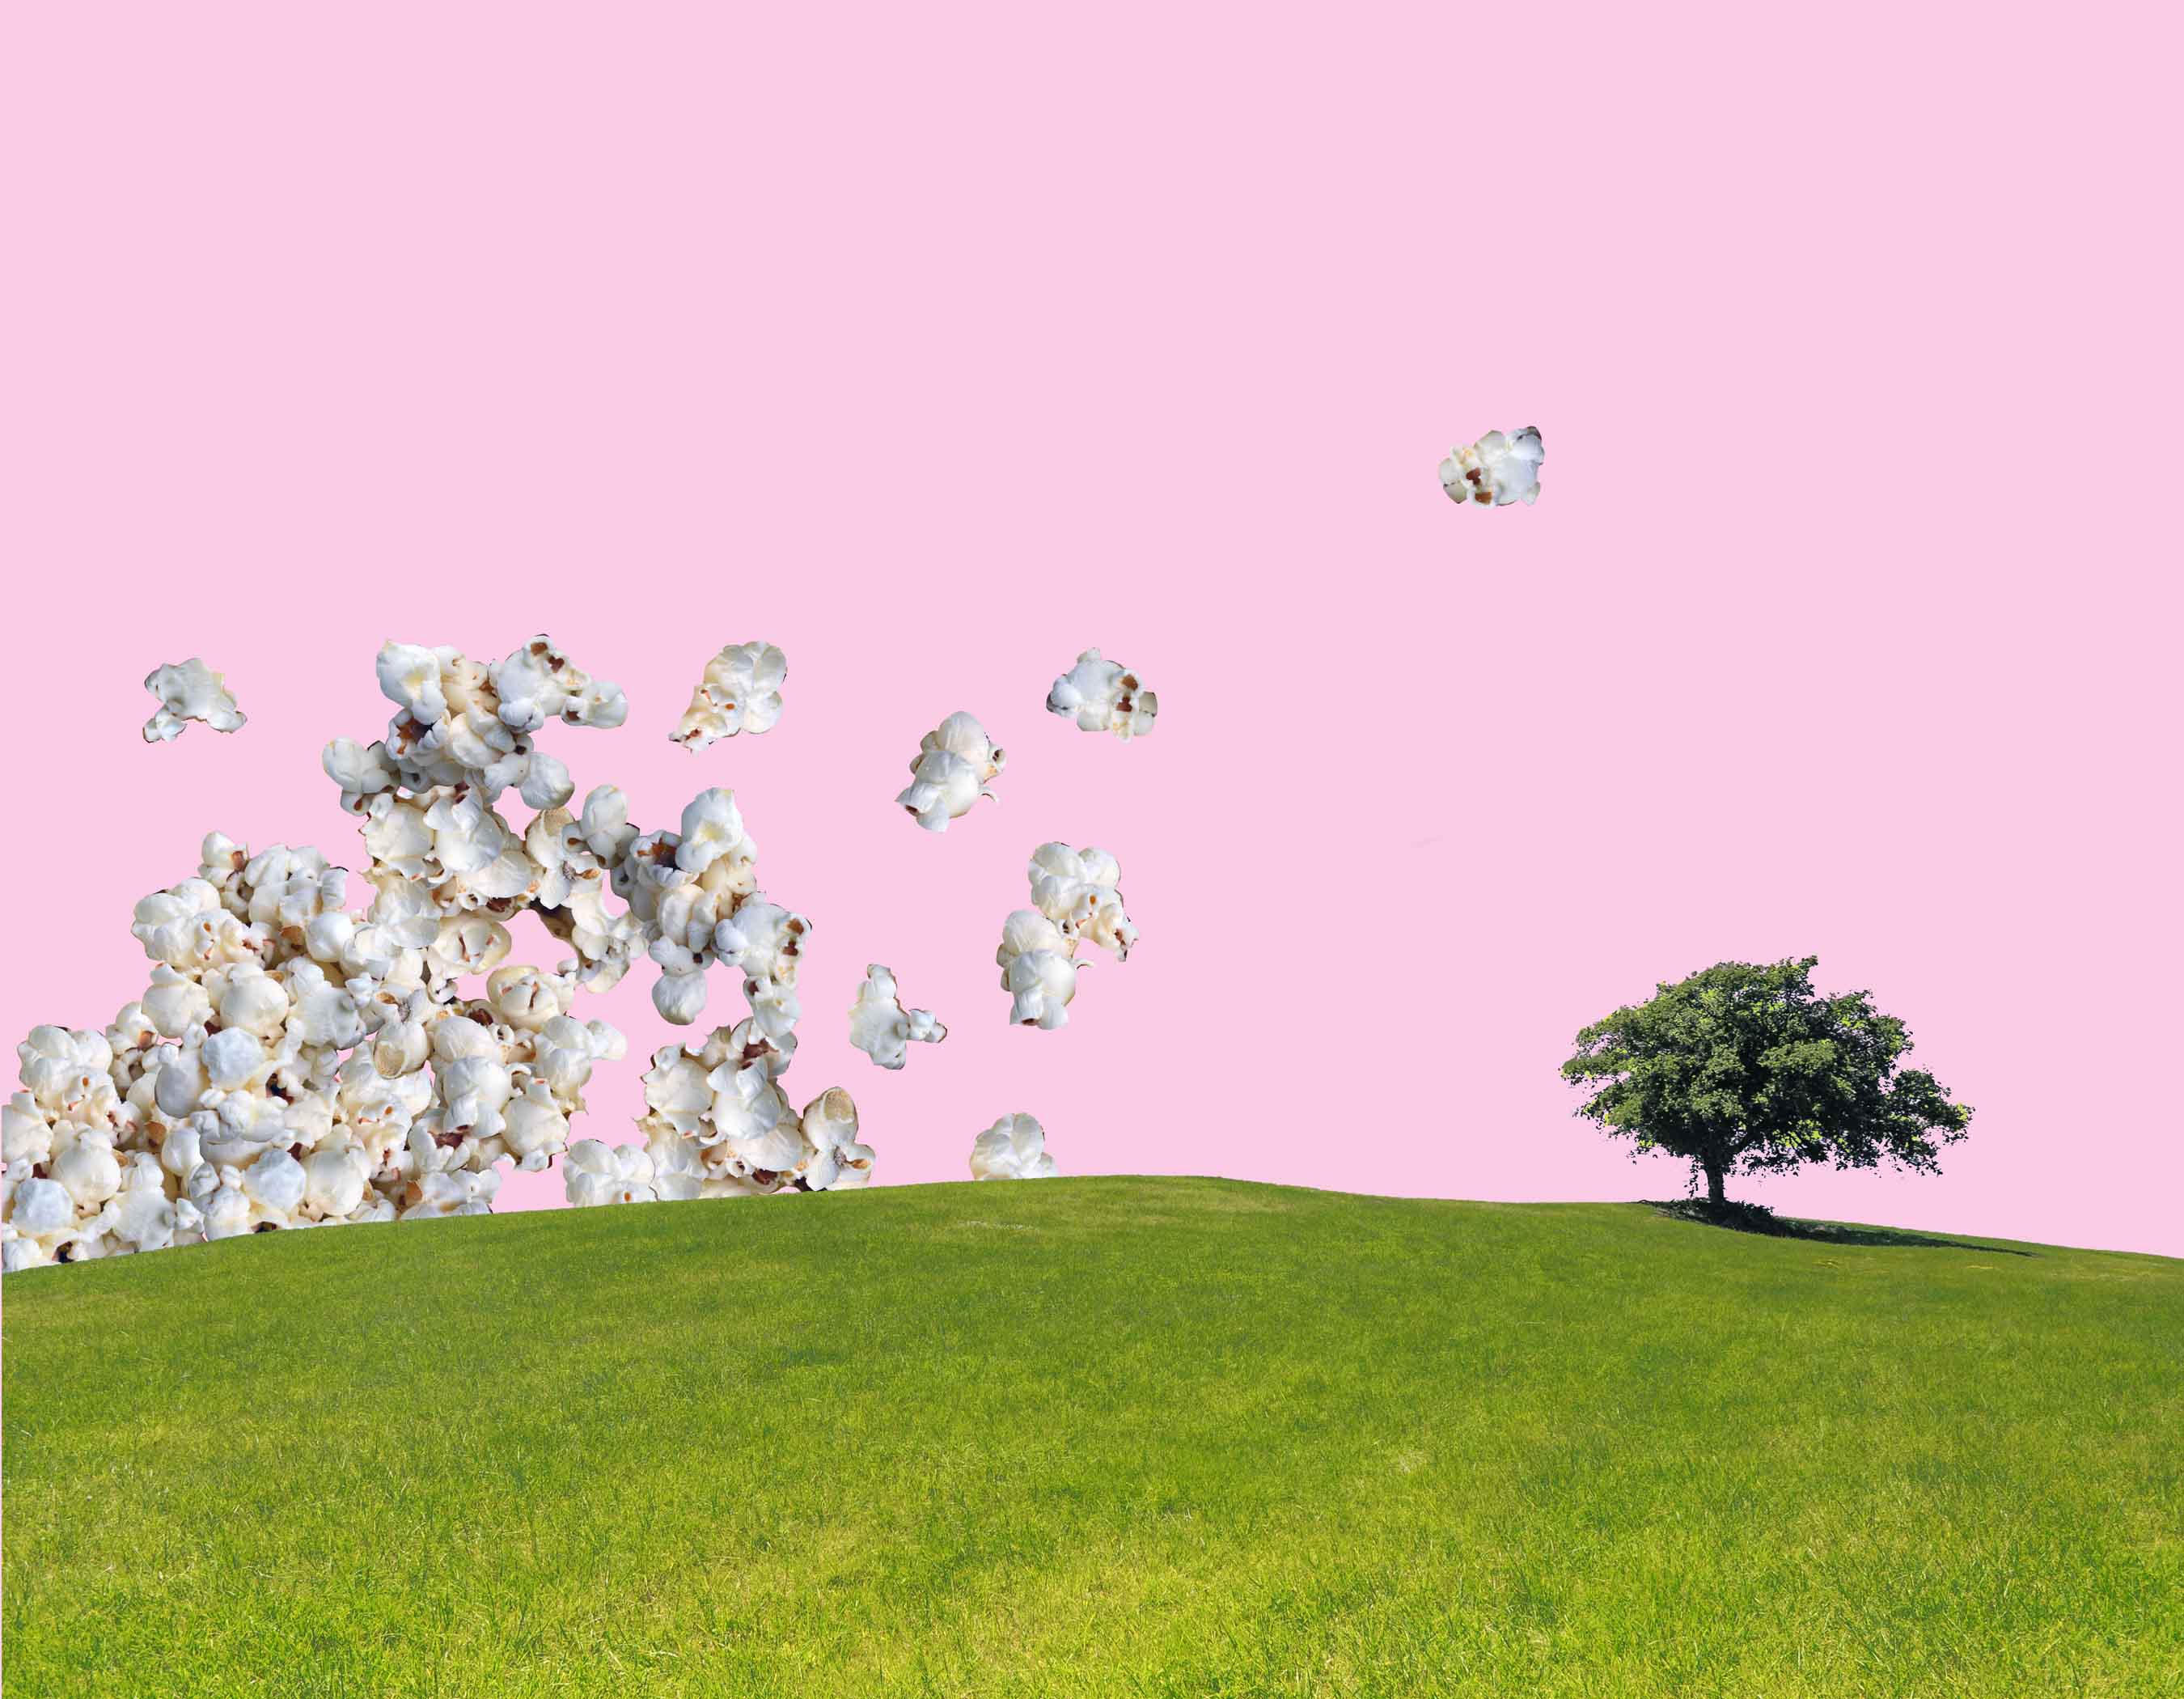 art every day number 417 / digital montage / pink popcorn sky